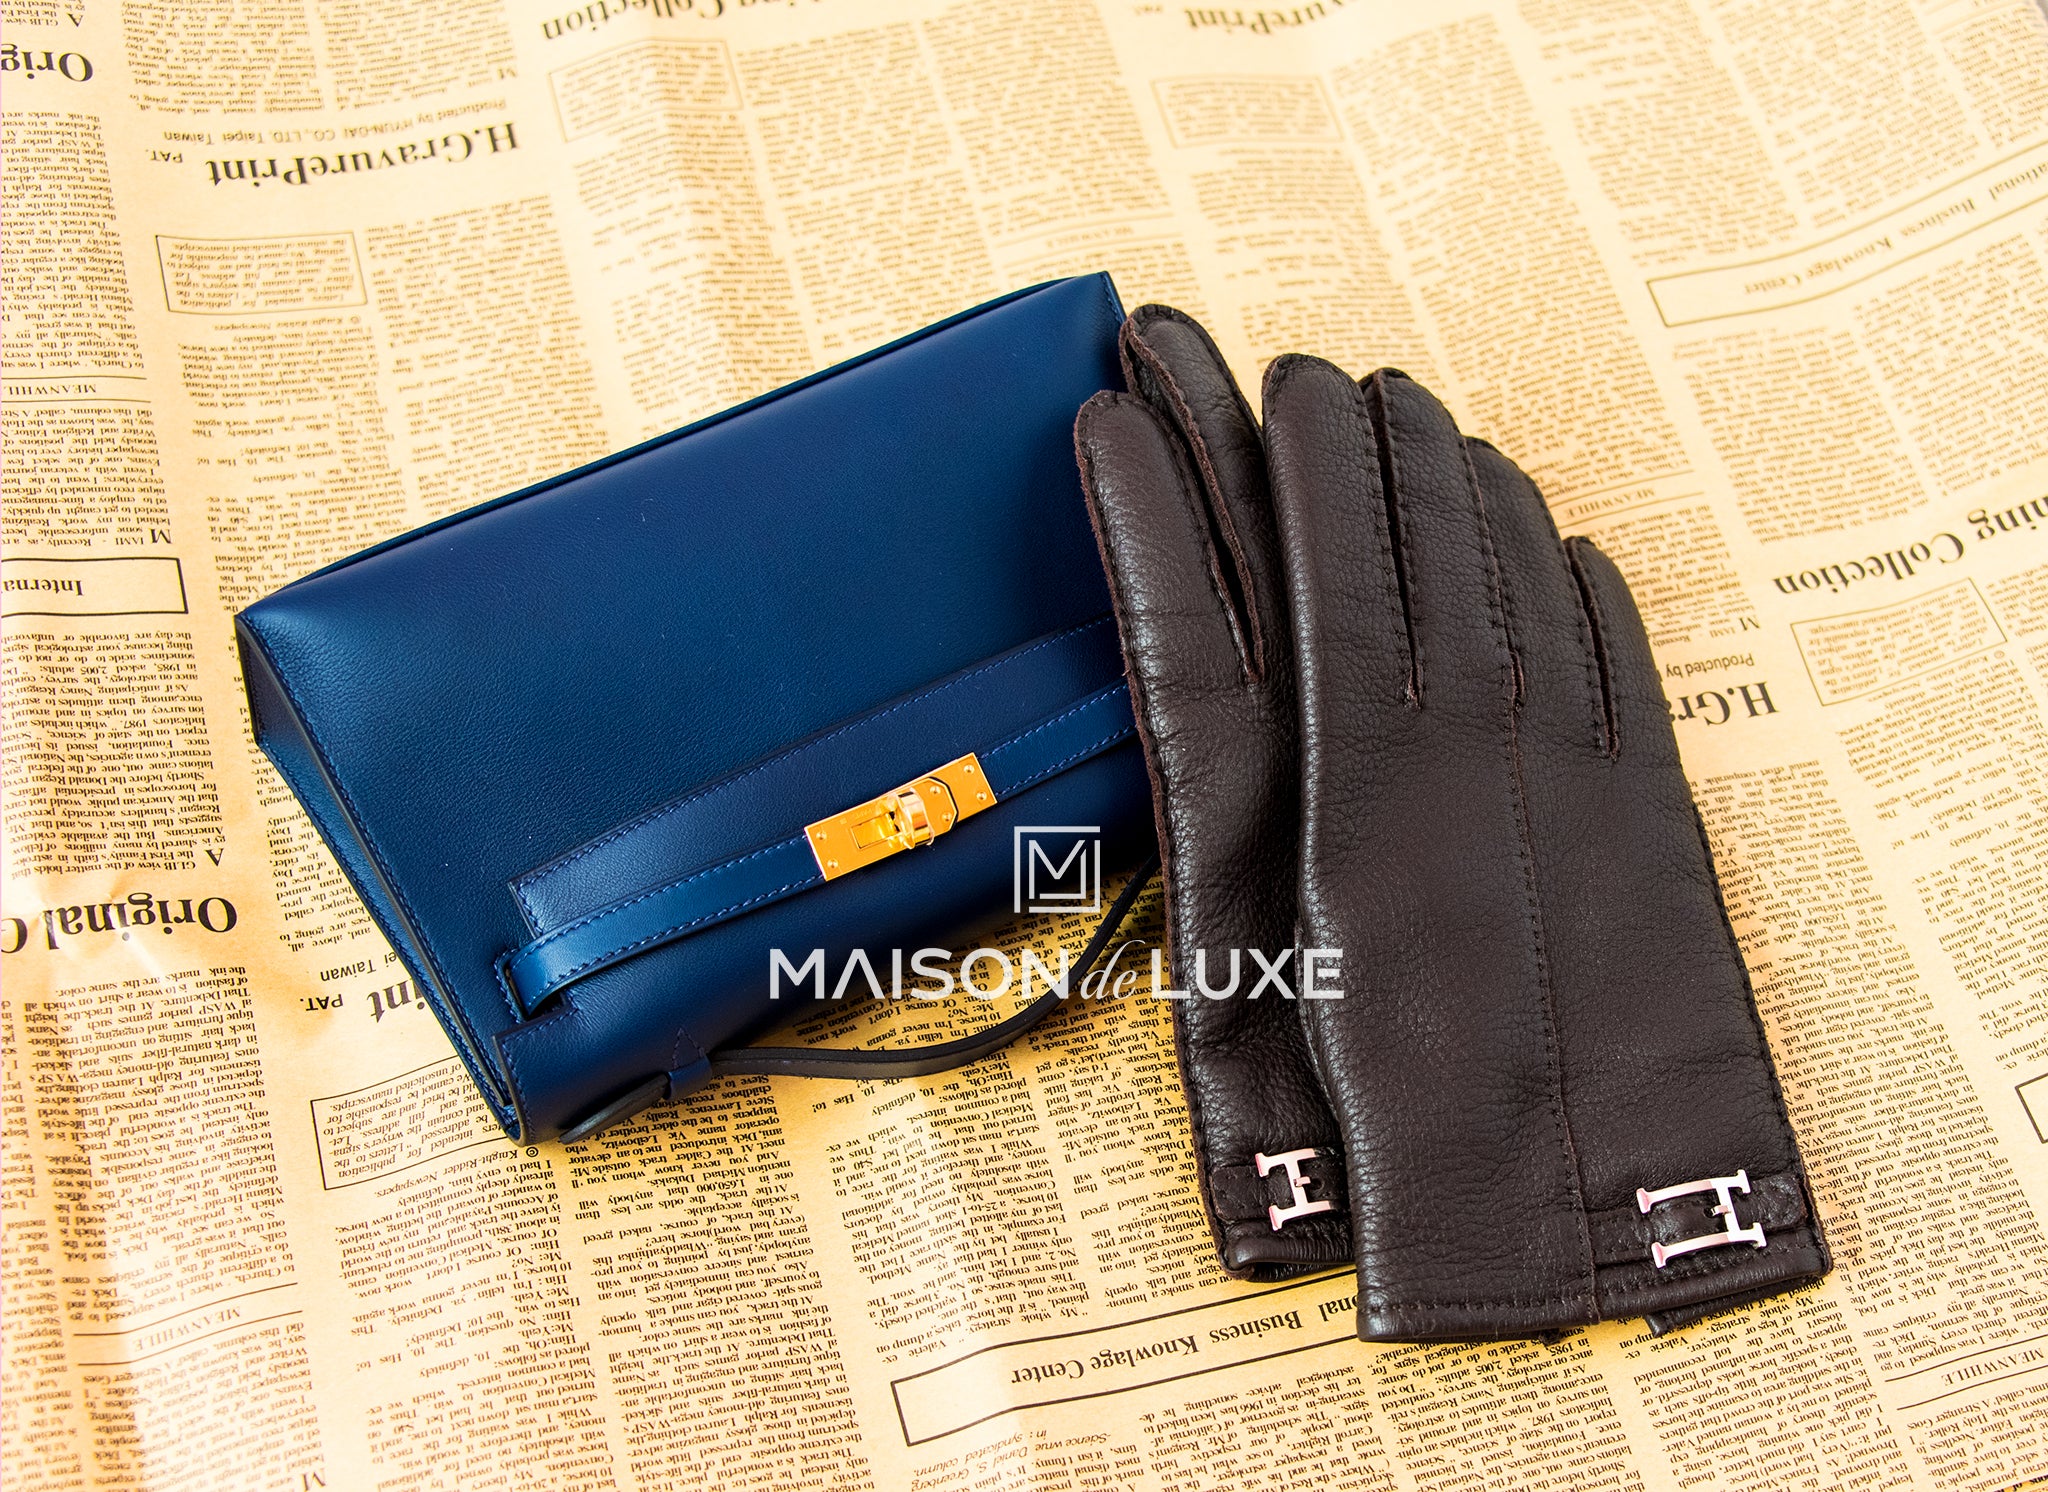 Hermes Navy Blue 7U Swift Kelly Pochette Clutch Bag Handbag